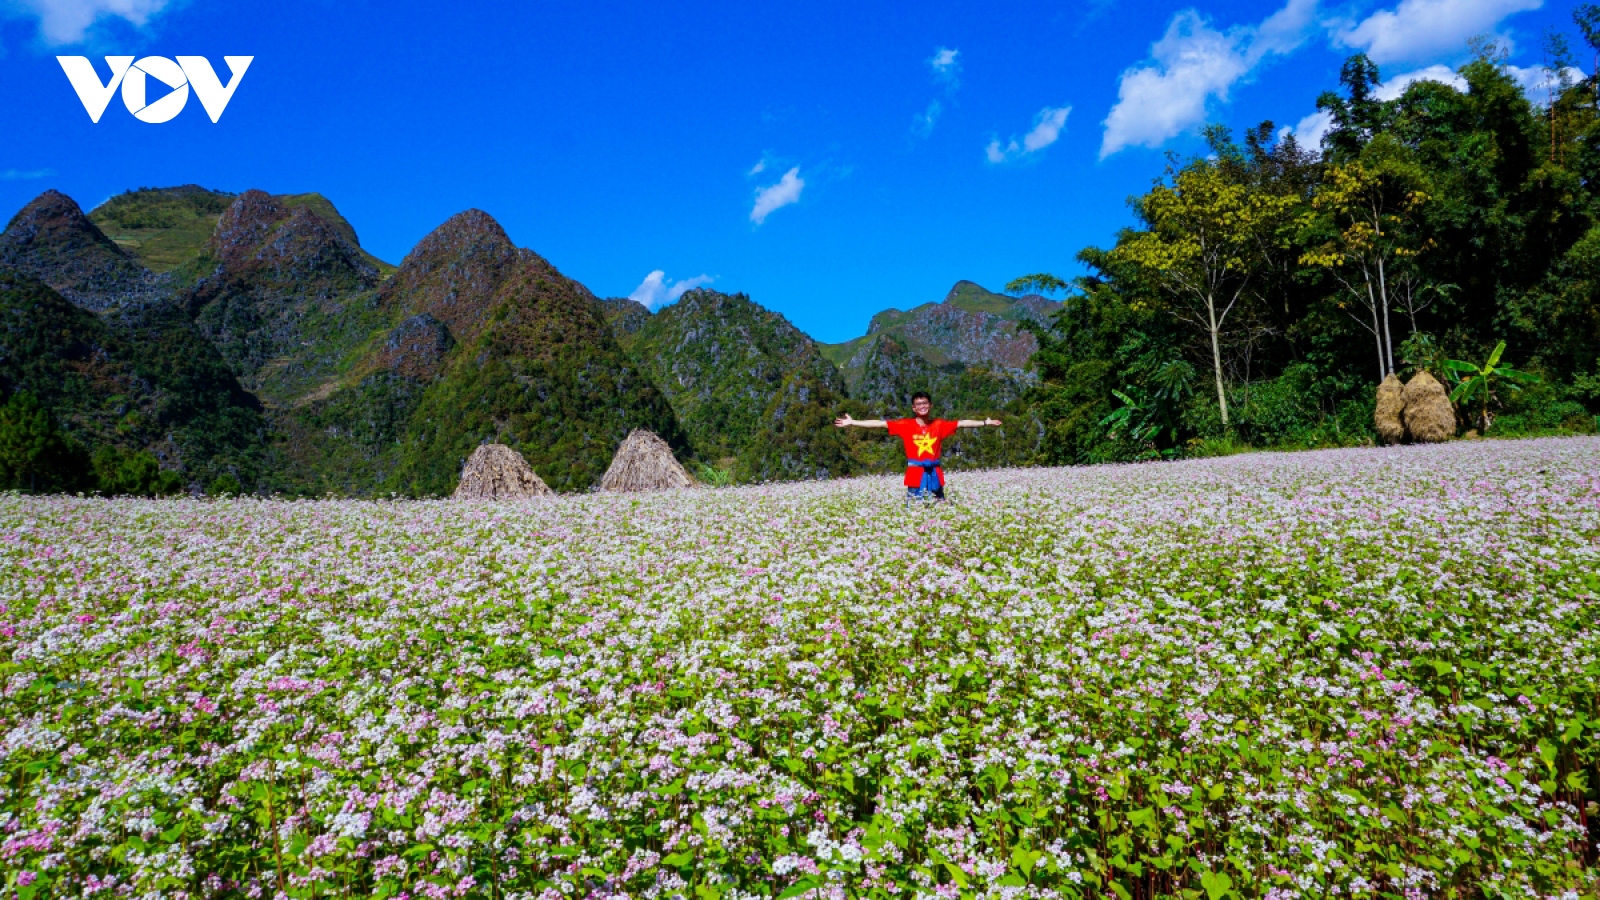  Buckwheat flowers beautify northern mountainous Ha Giang province